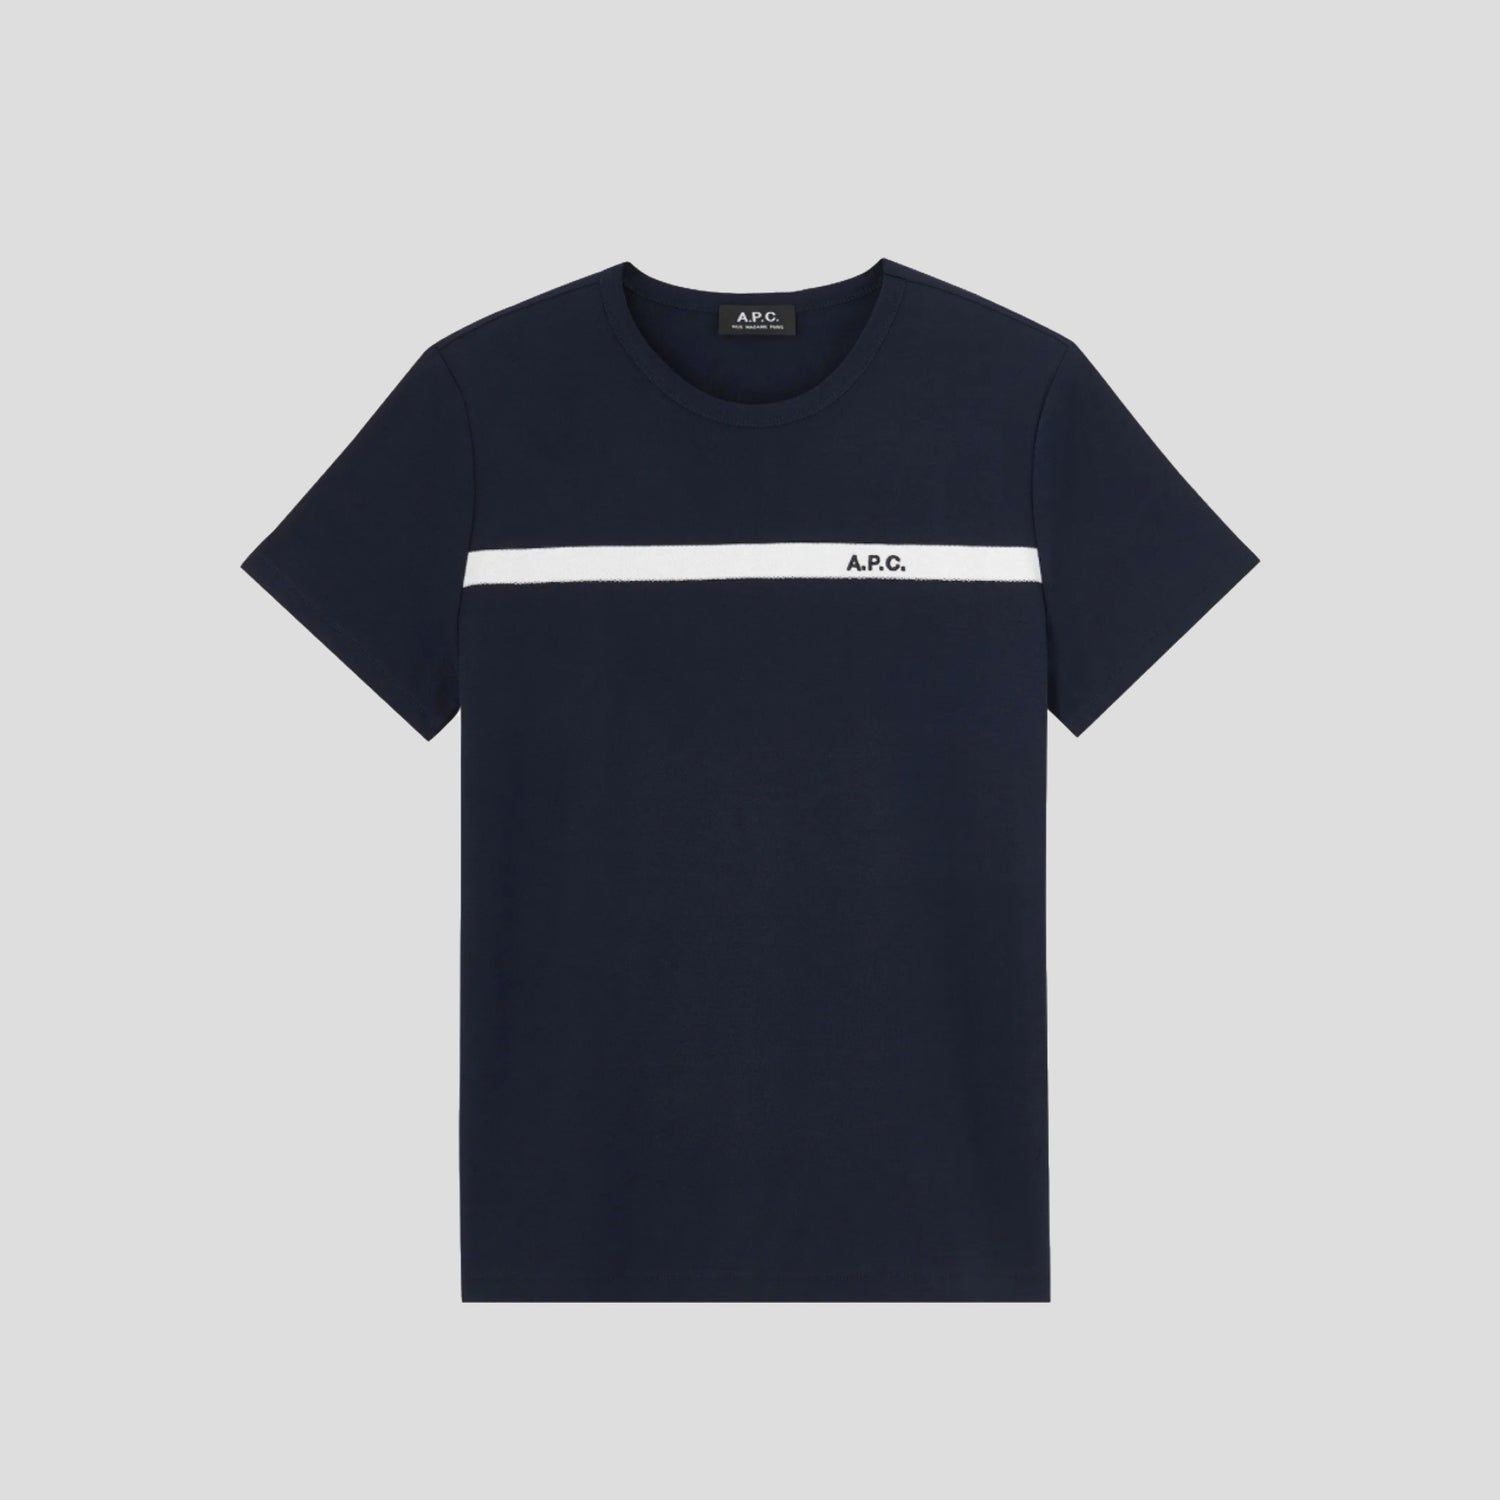 A.P.C.Tee shirt Yukata (navy)